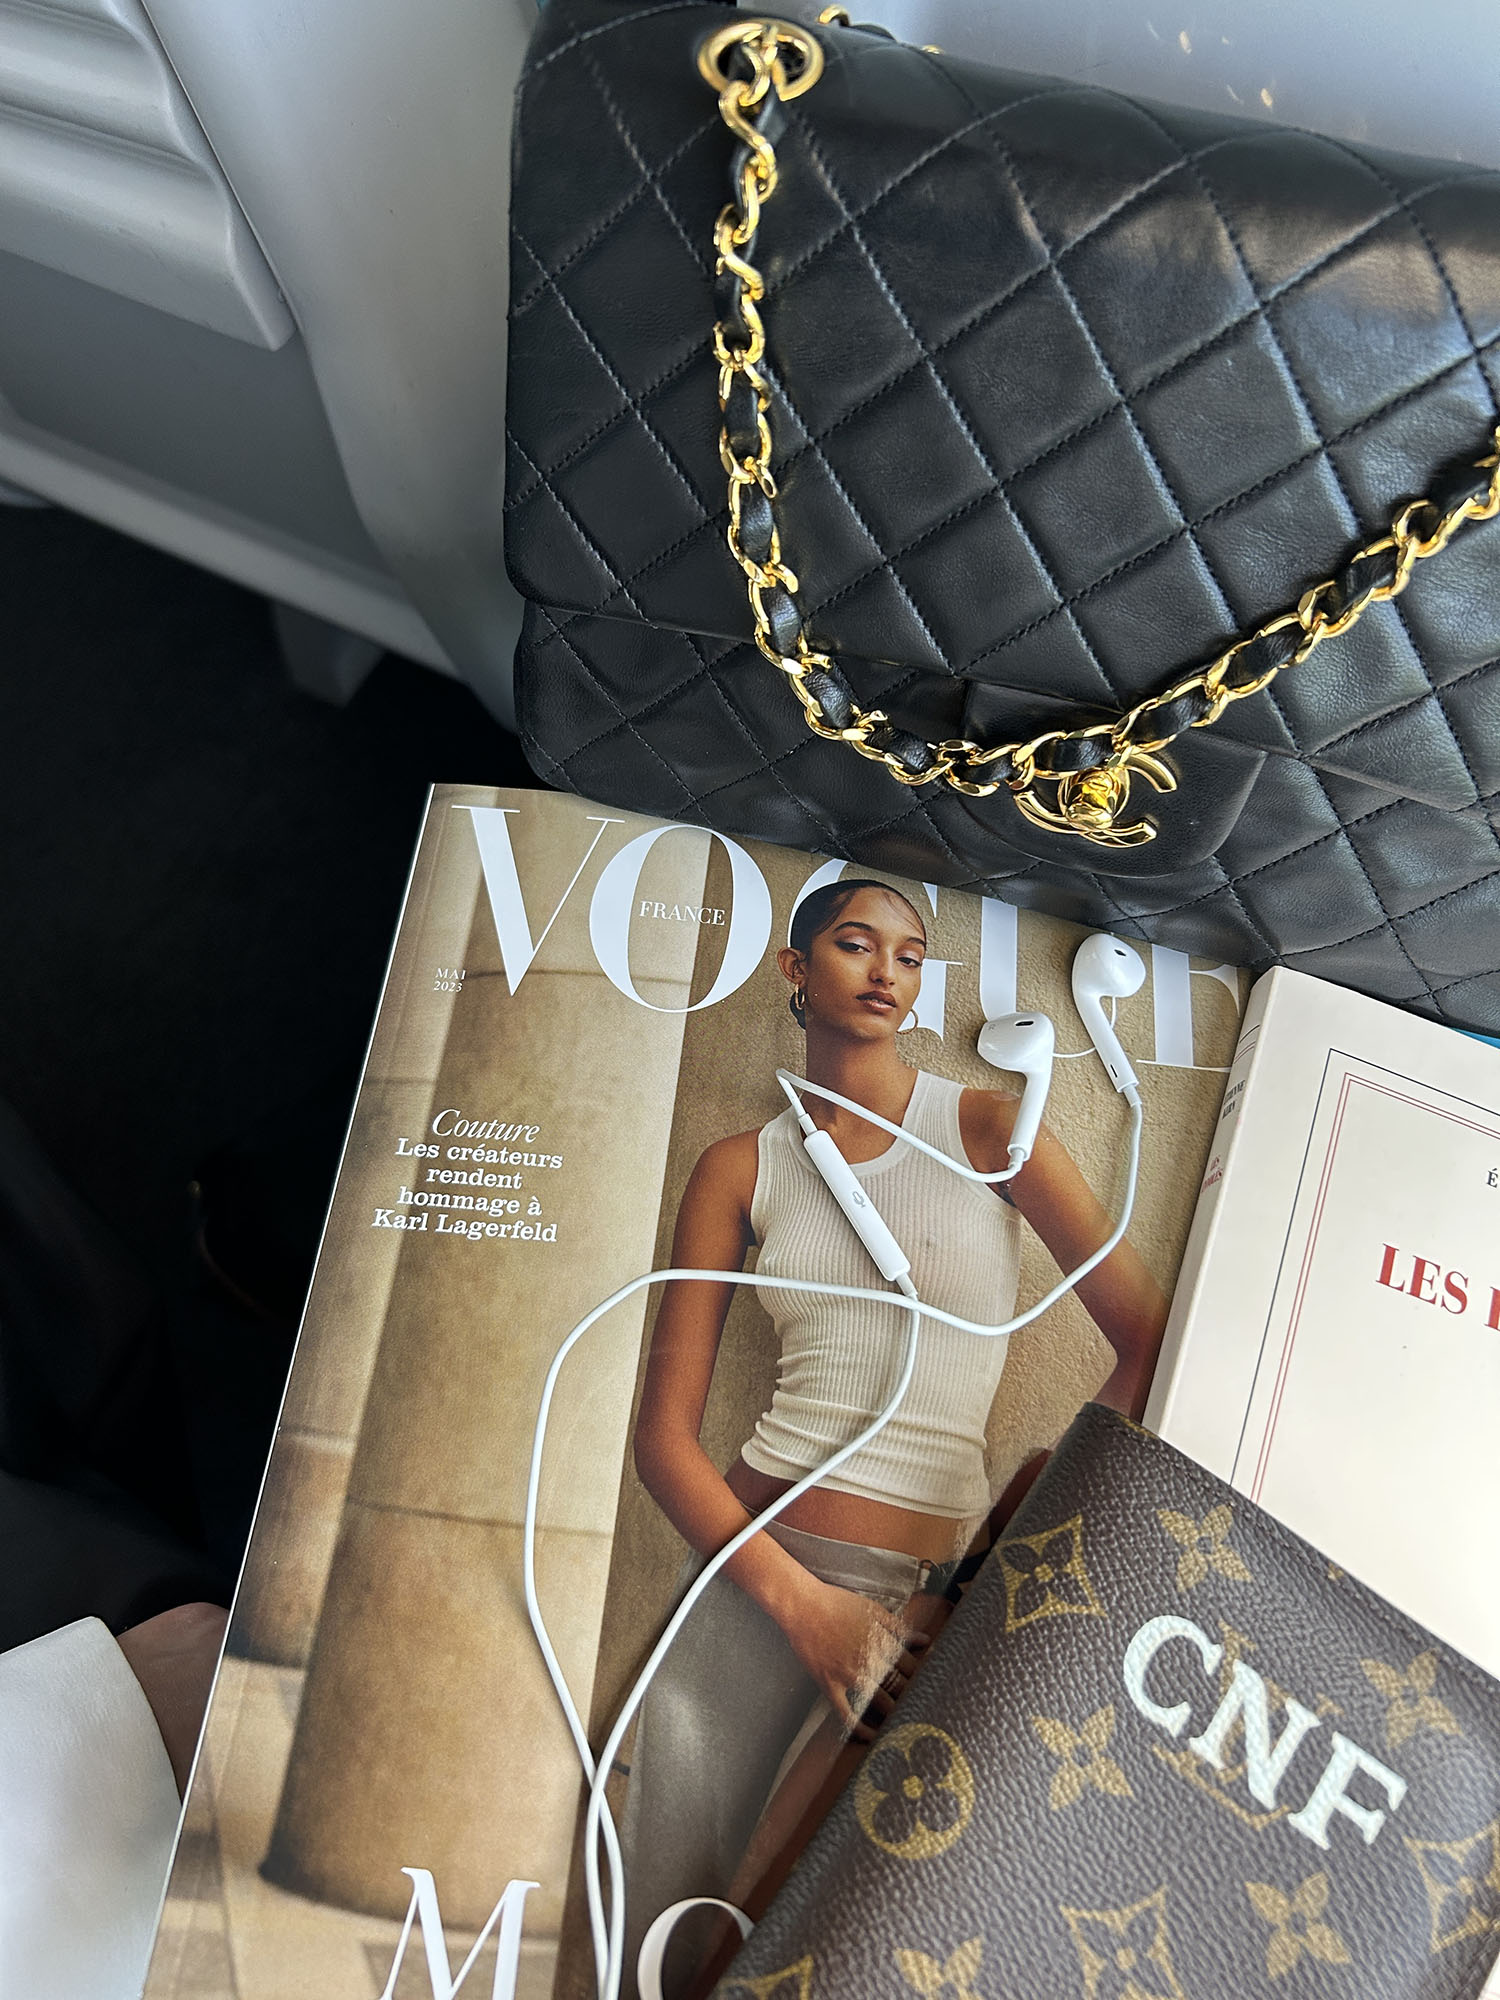 Coco & Voltaire - Vogue France, Louis Vuitton passport holder and Chanel handbag on train